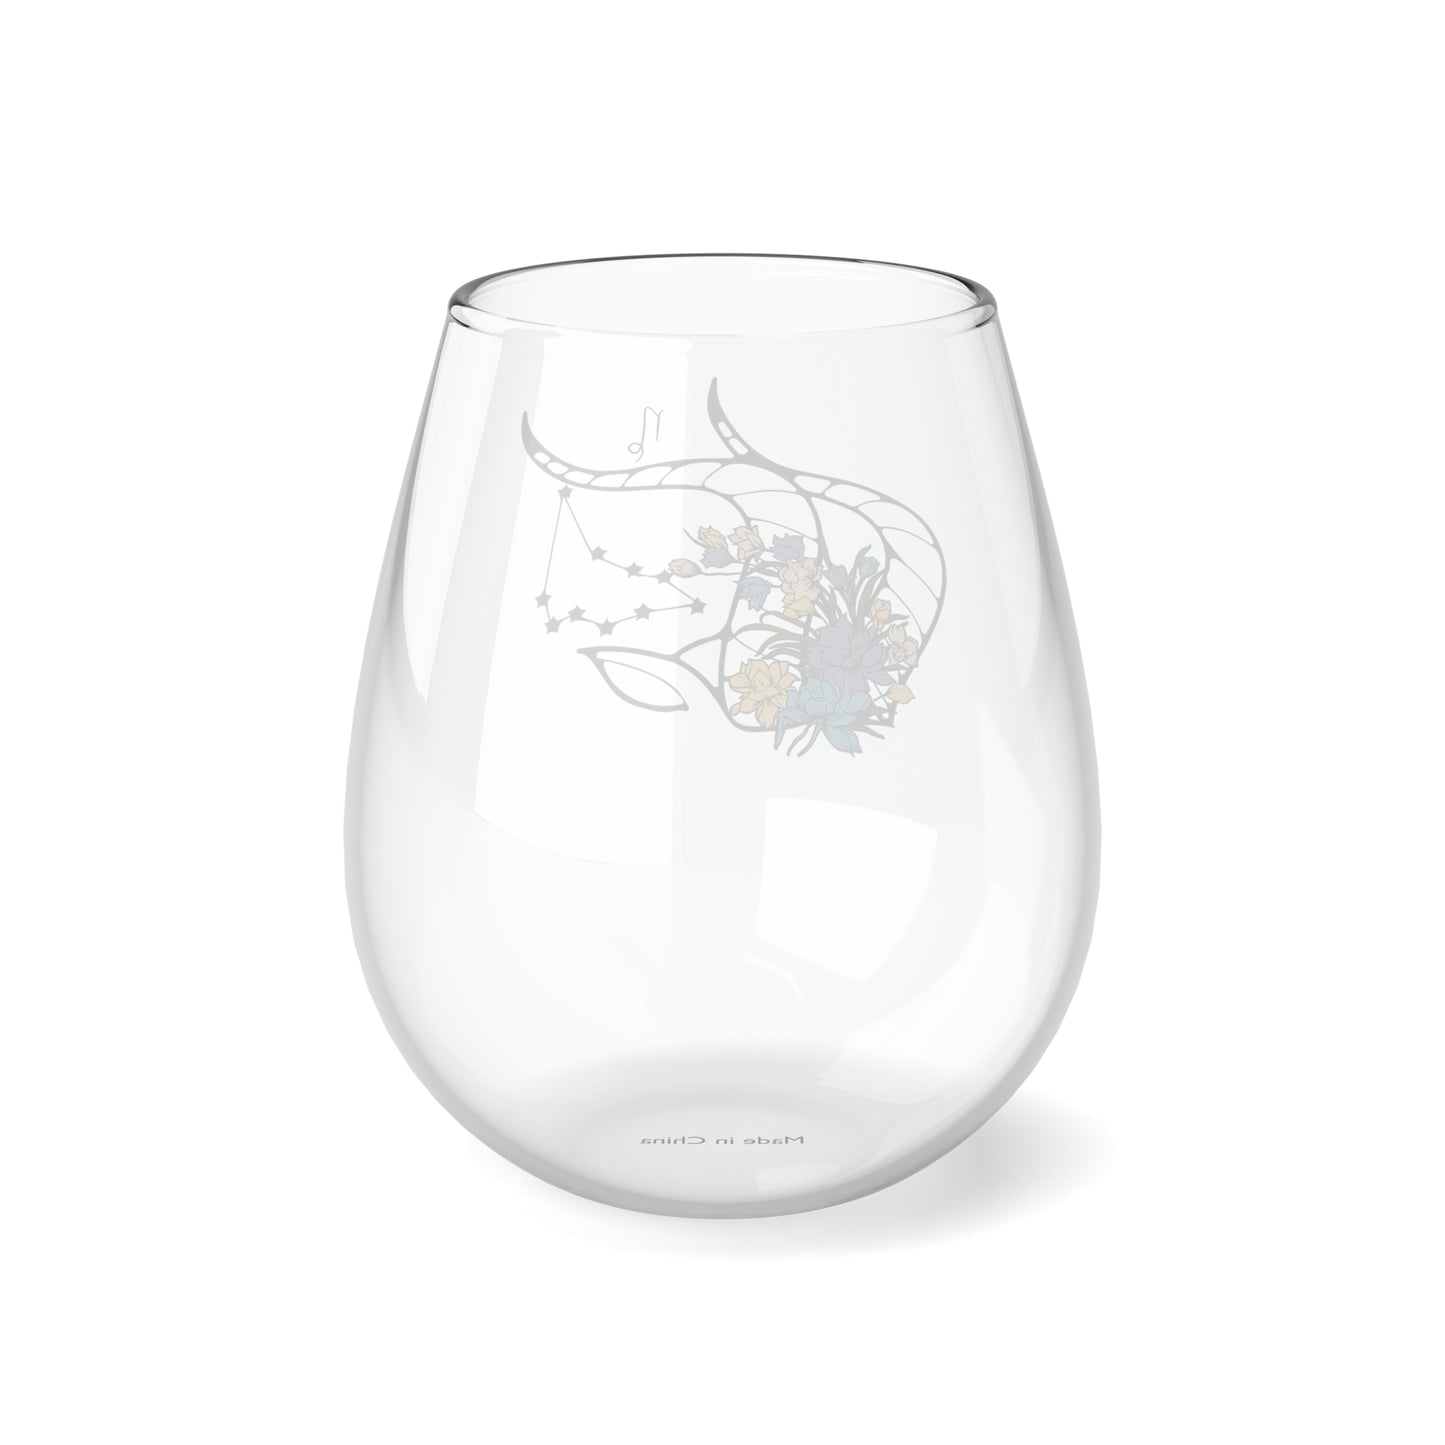 Capricorn Flowers and Stars Stemless Wine Glass, 11.75oz